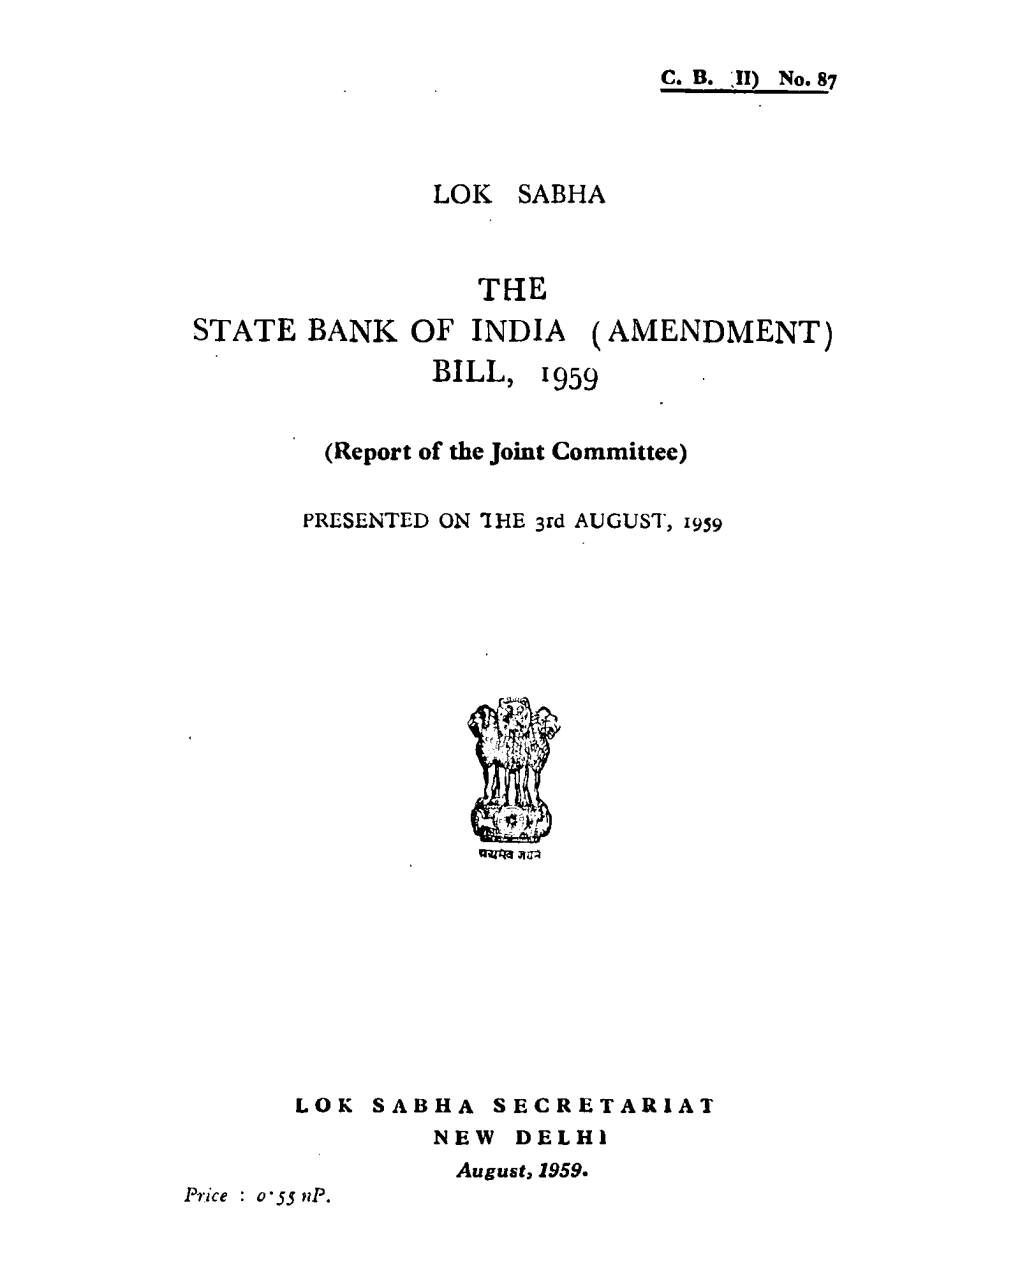 The State Bank of India (Amendment) Bill, 1959